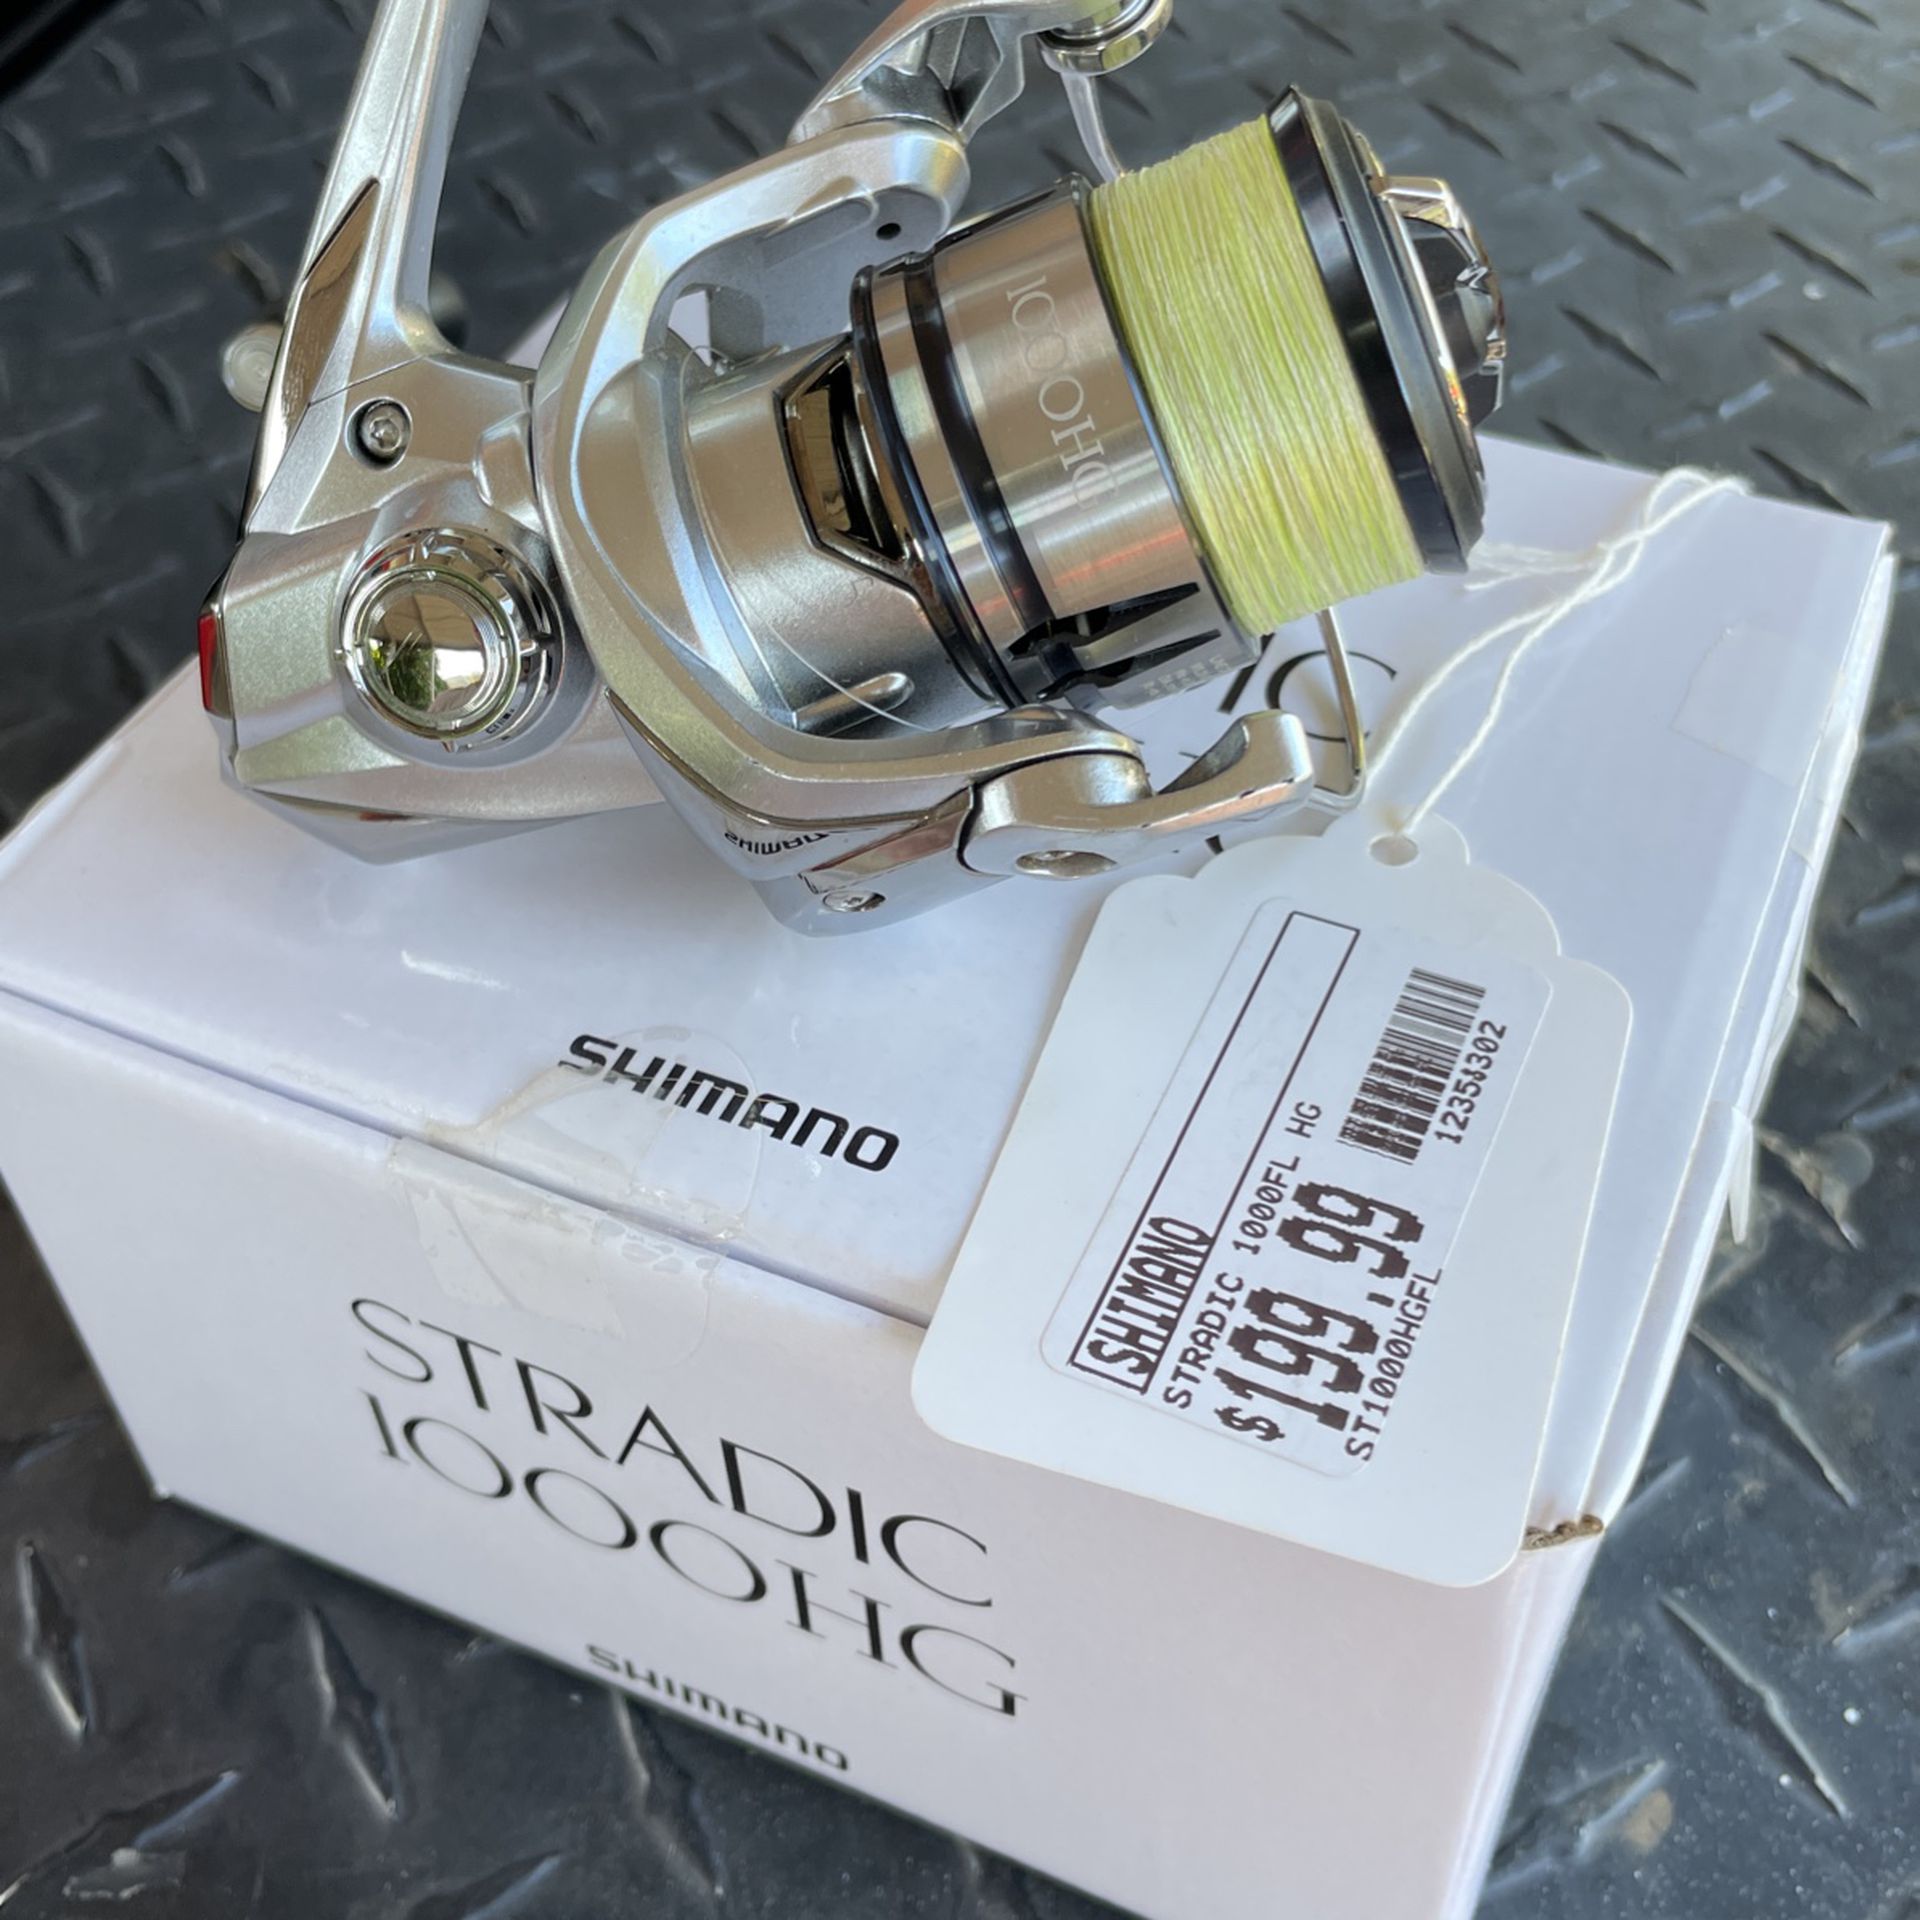 Shimano Stradic 1000 for Sale in Murrieta, CA - OfferUp